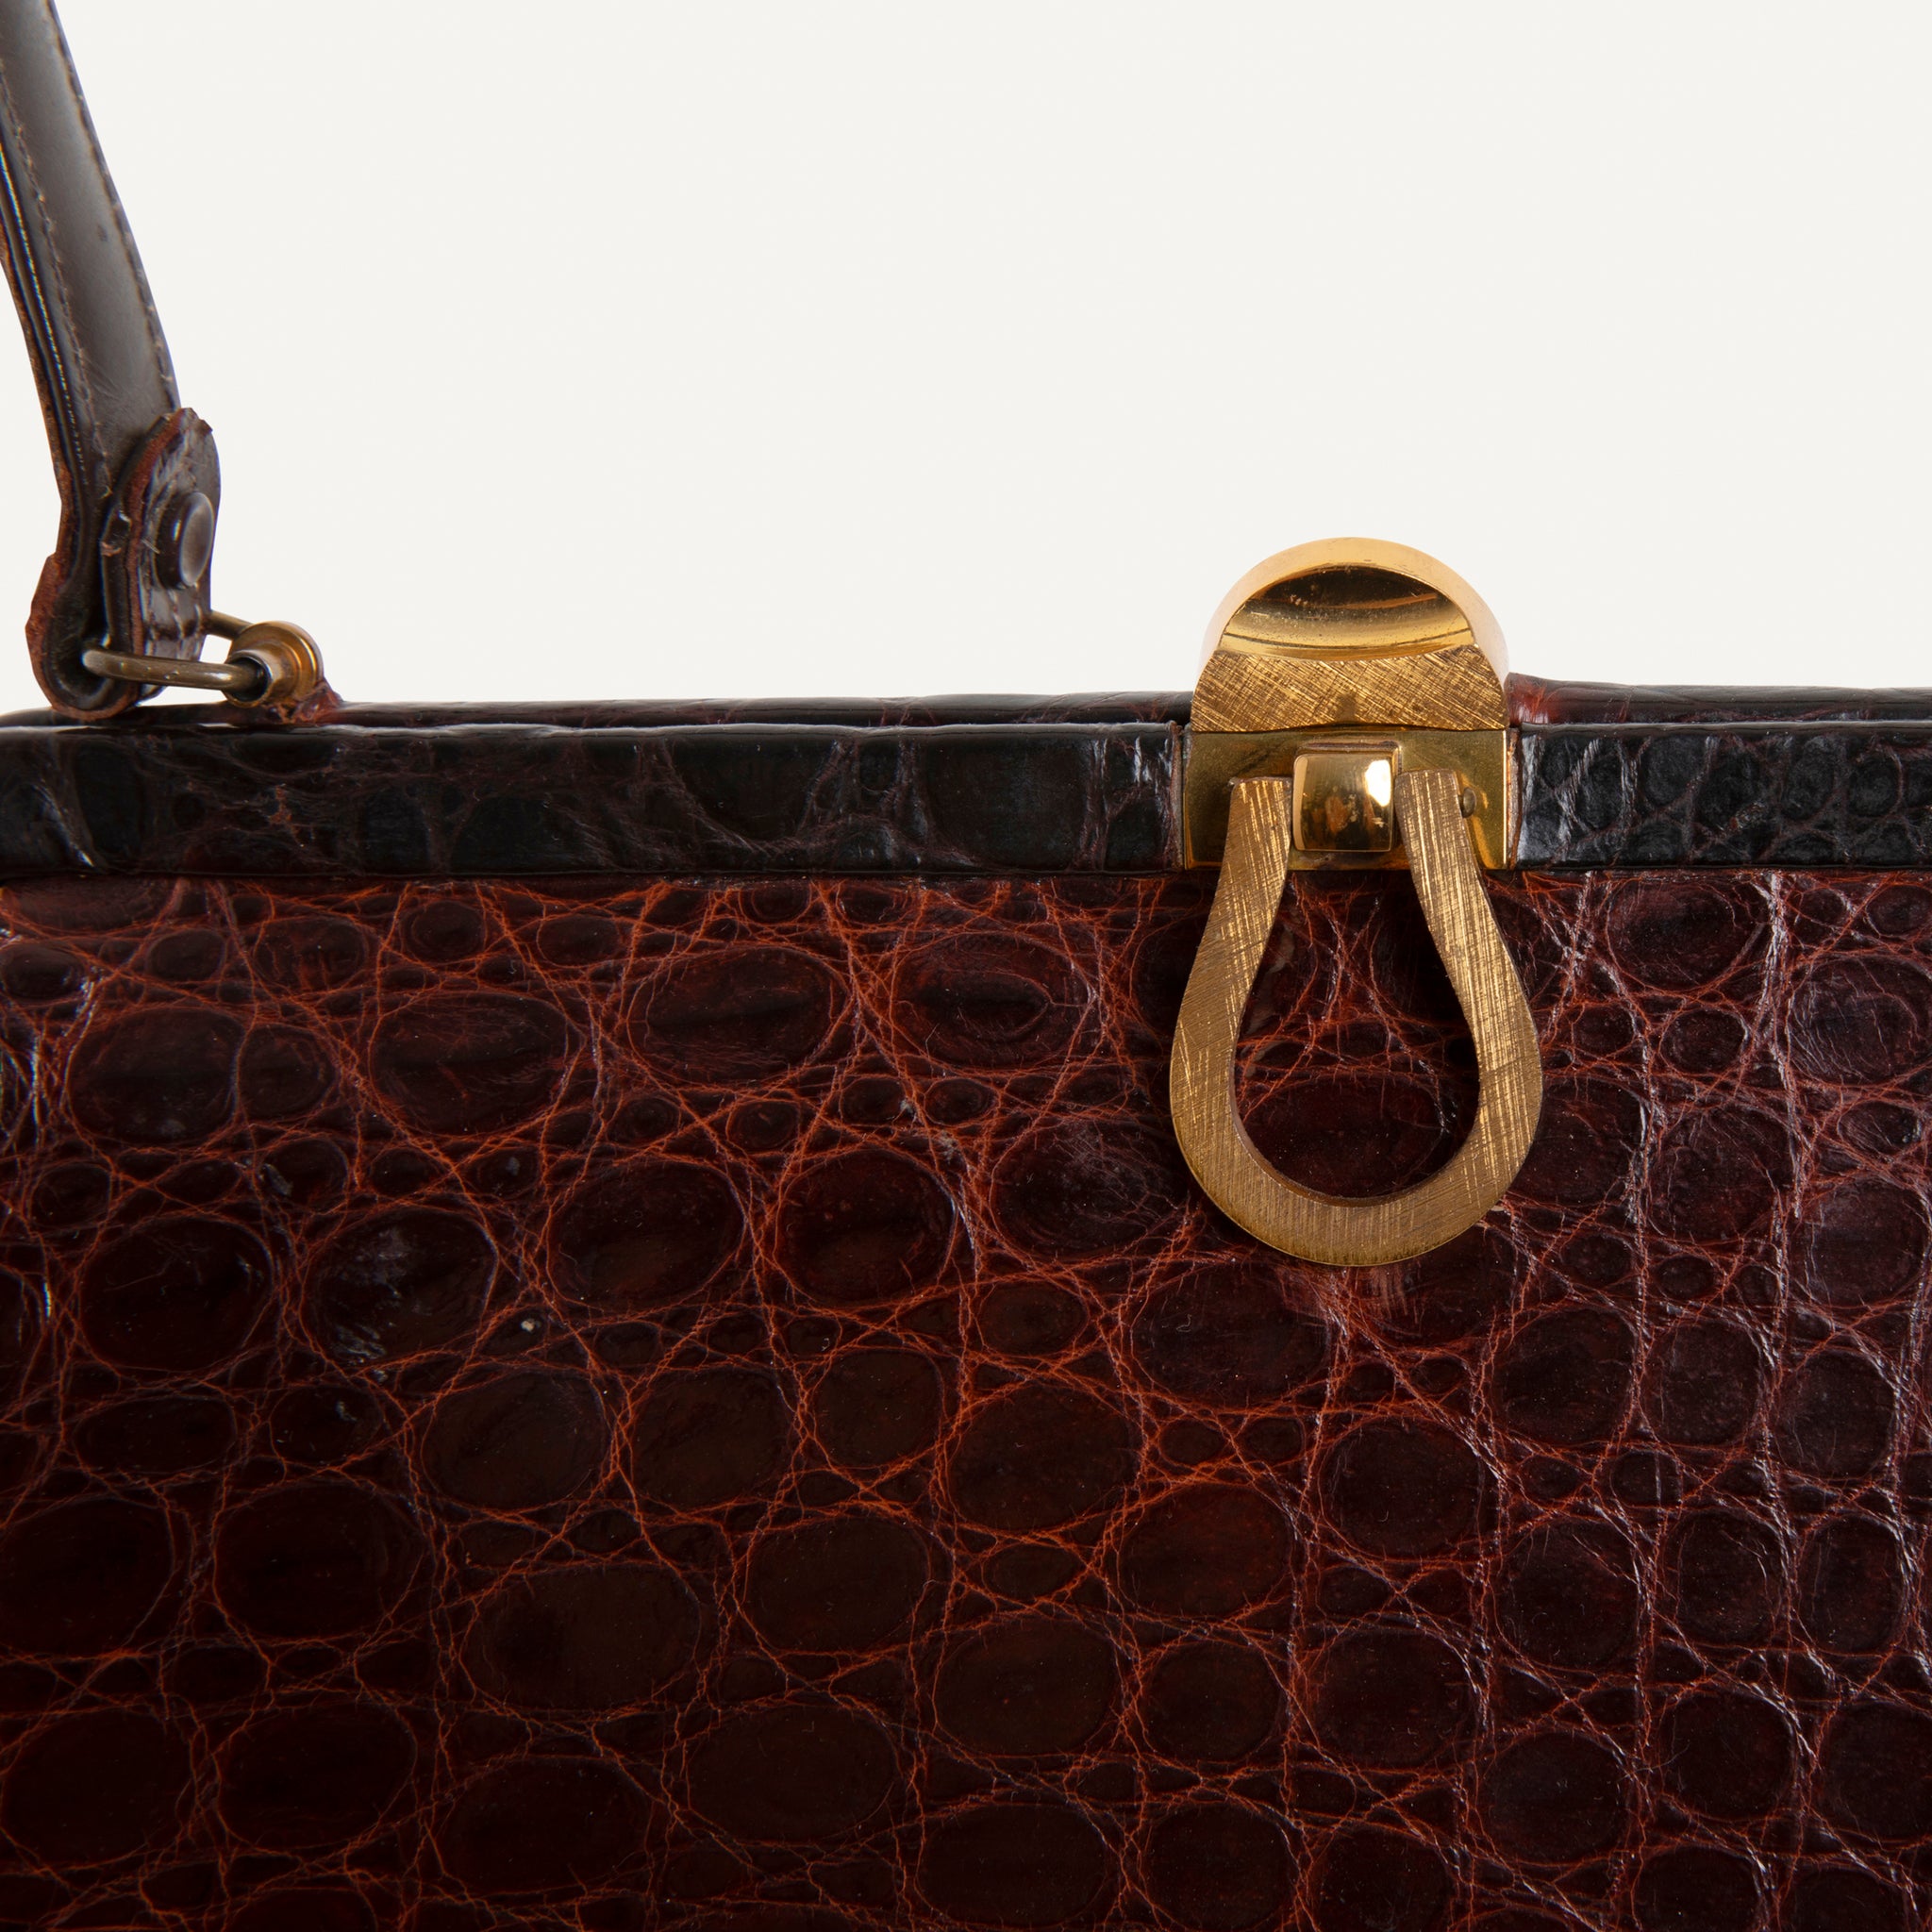 The Alligator Purse | Vintage Leather Tote Bag | Red/Brown/Black | Sale